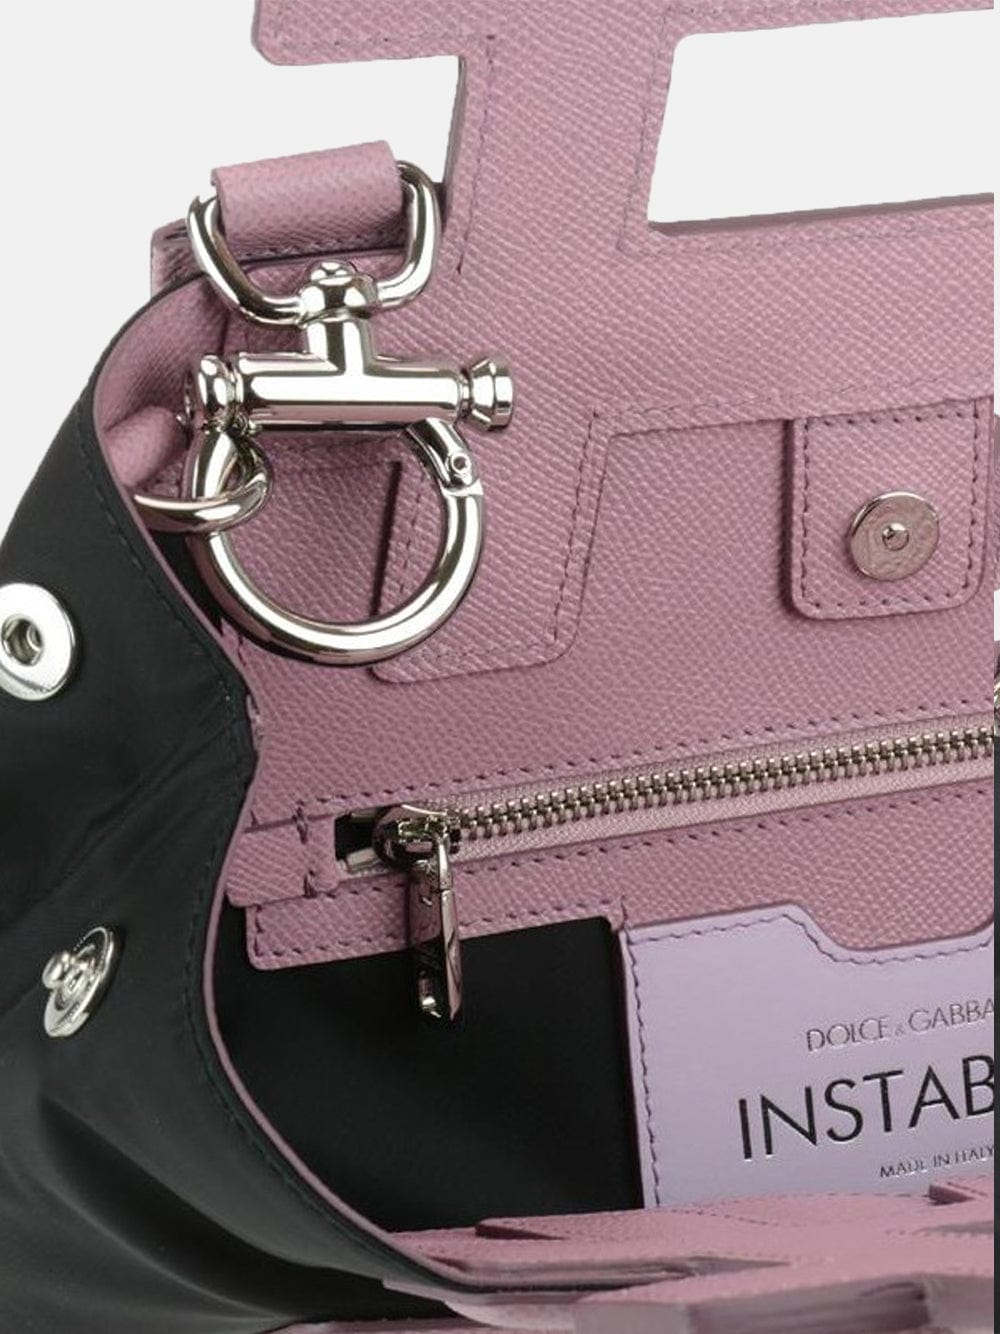 Dolce & Gabbana Instabag Technical Bag